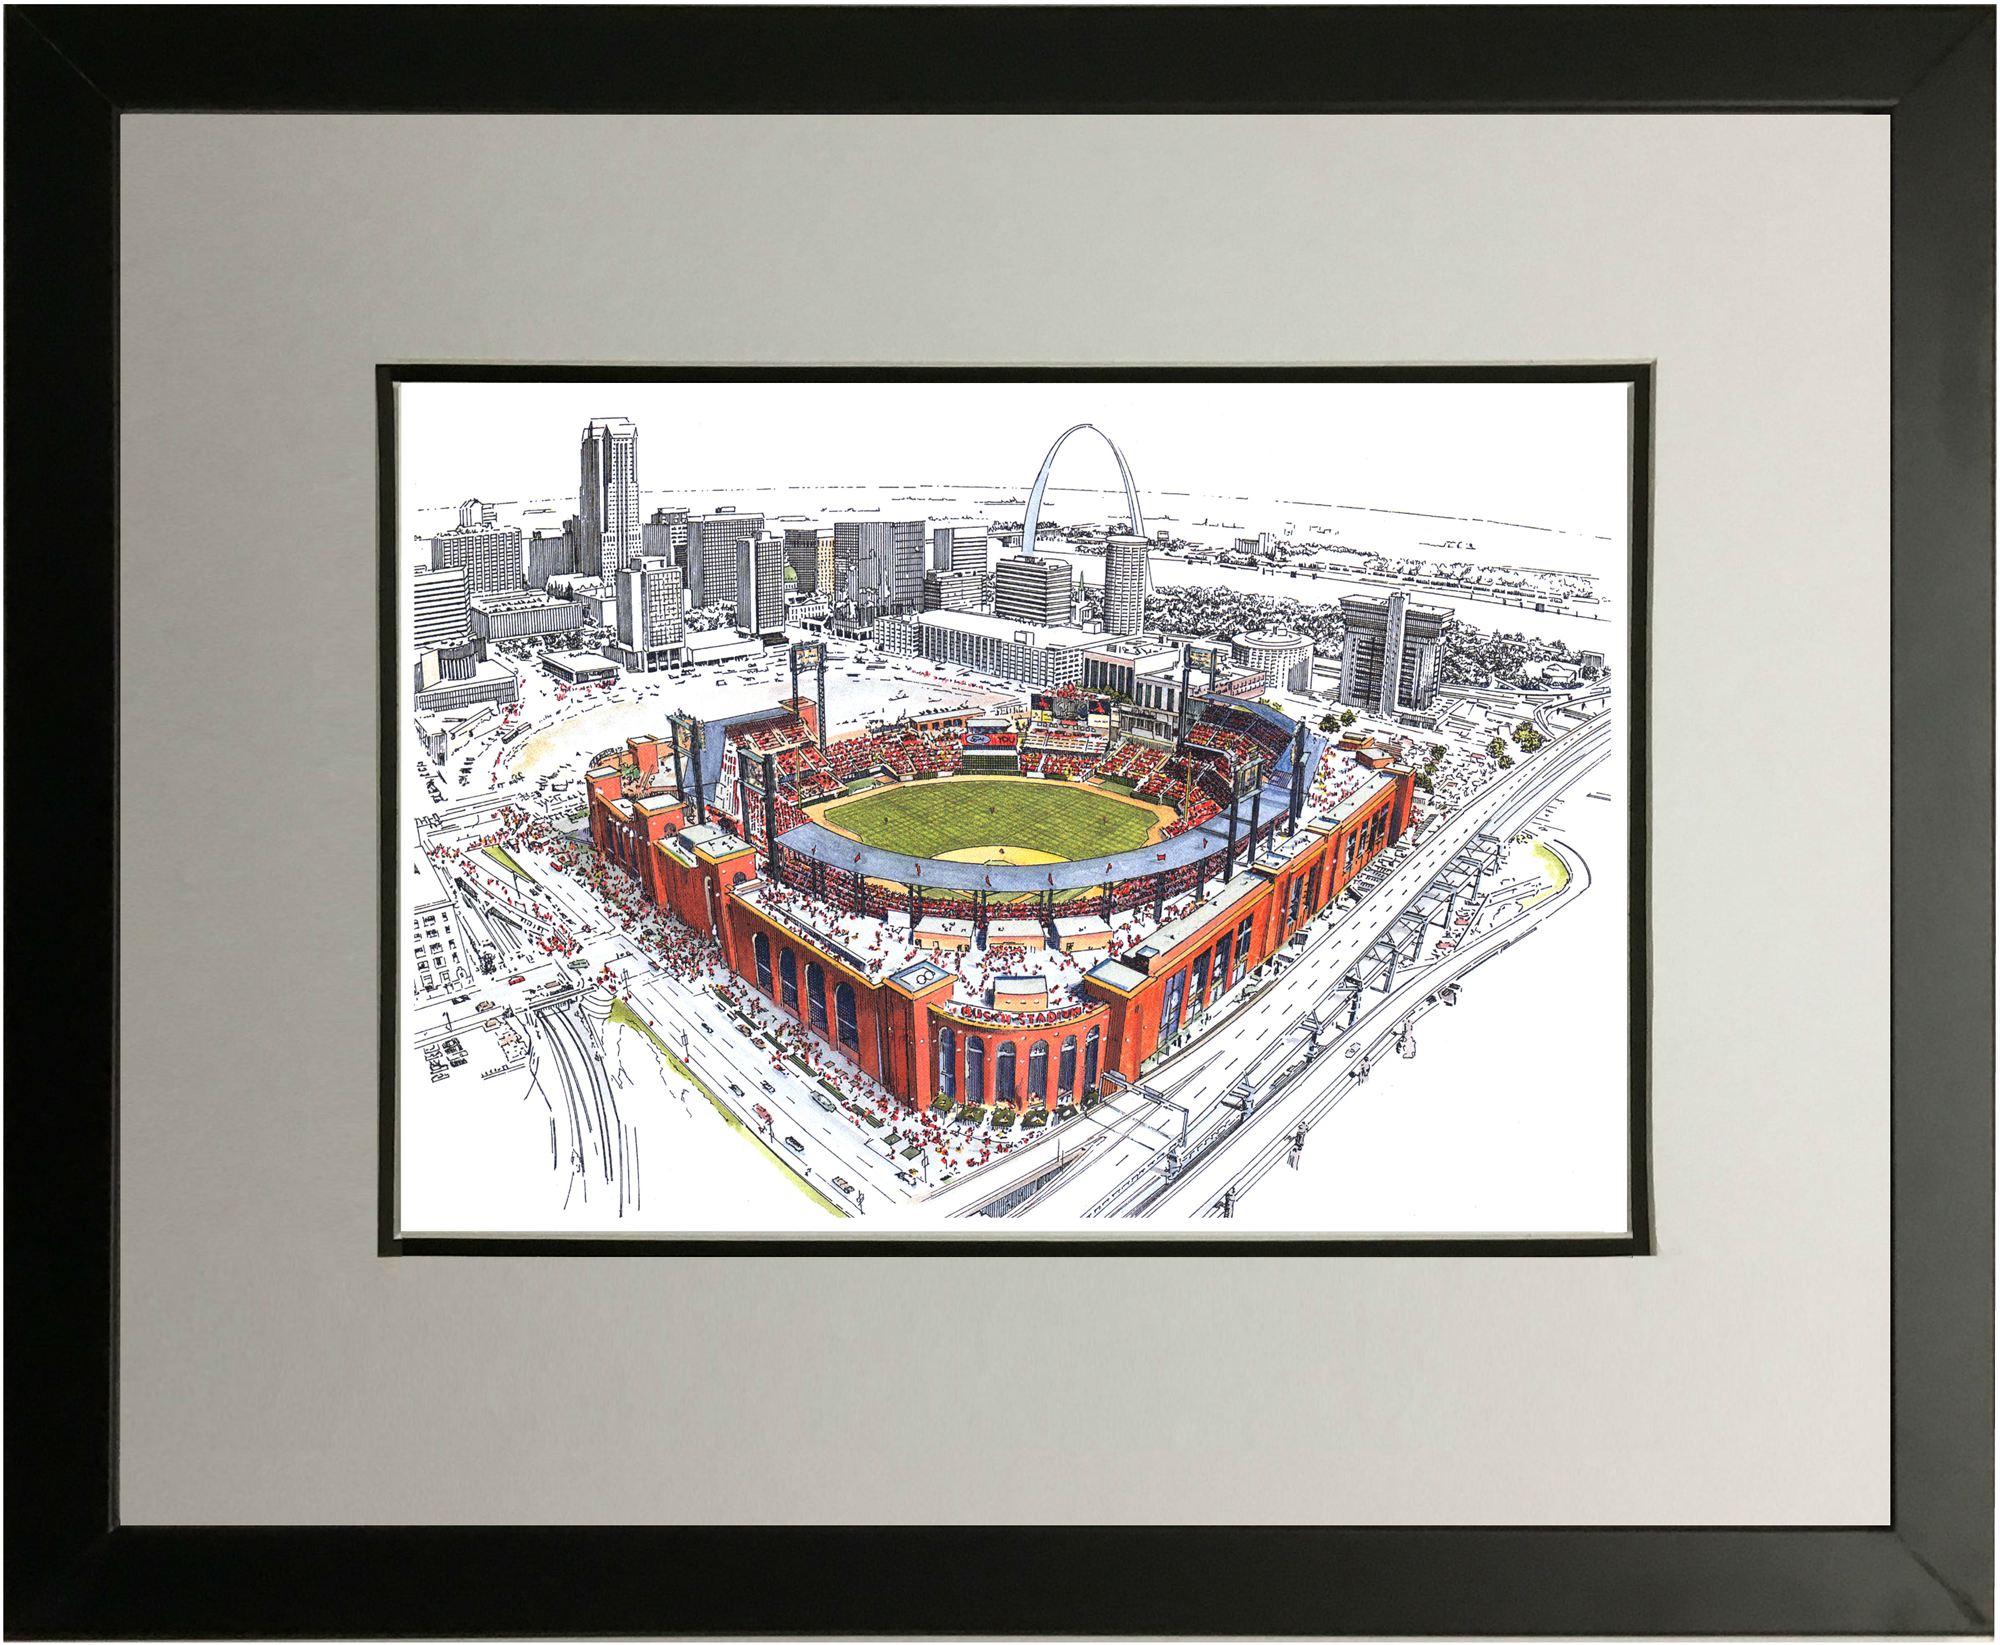 Busch Stadium St. Louis Cardinals Canvas Print - Baseball Stadium Canv -  Ducicanvas